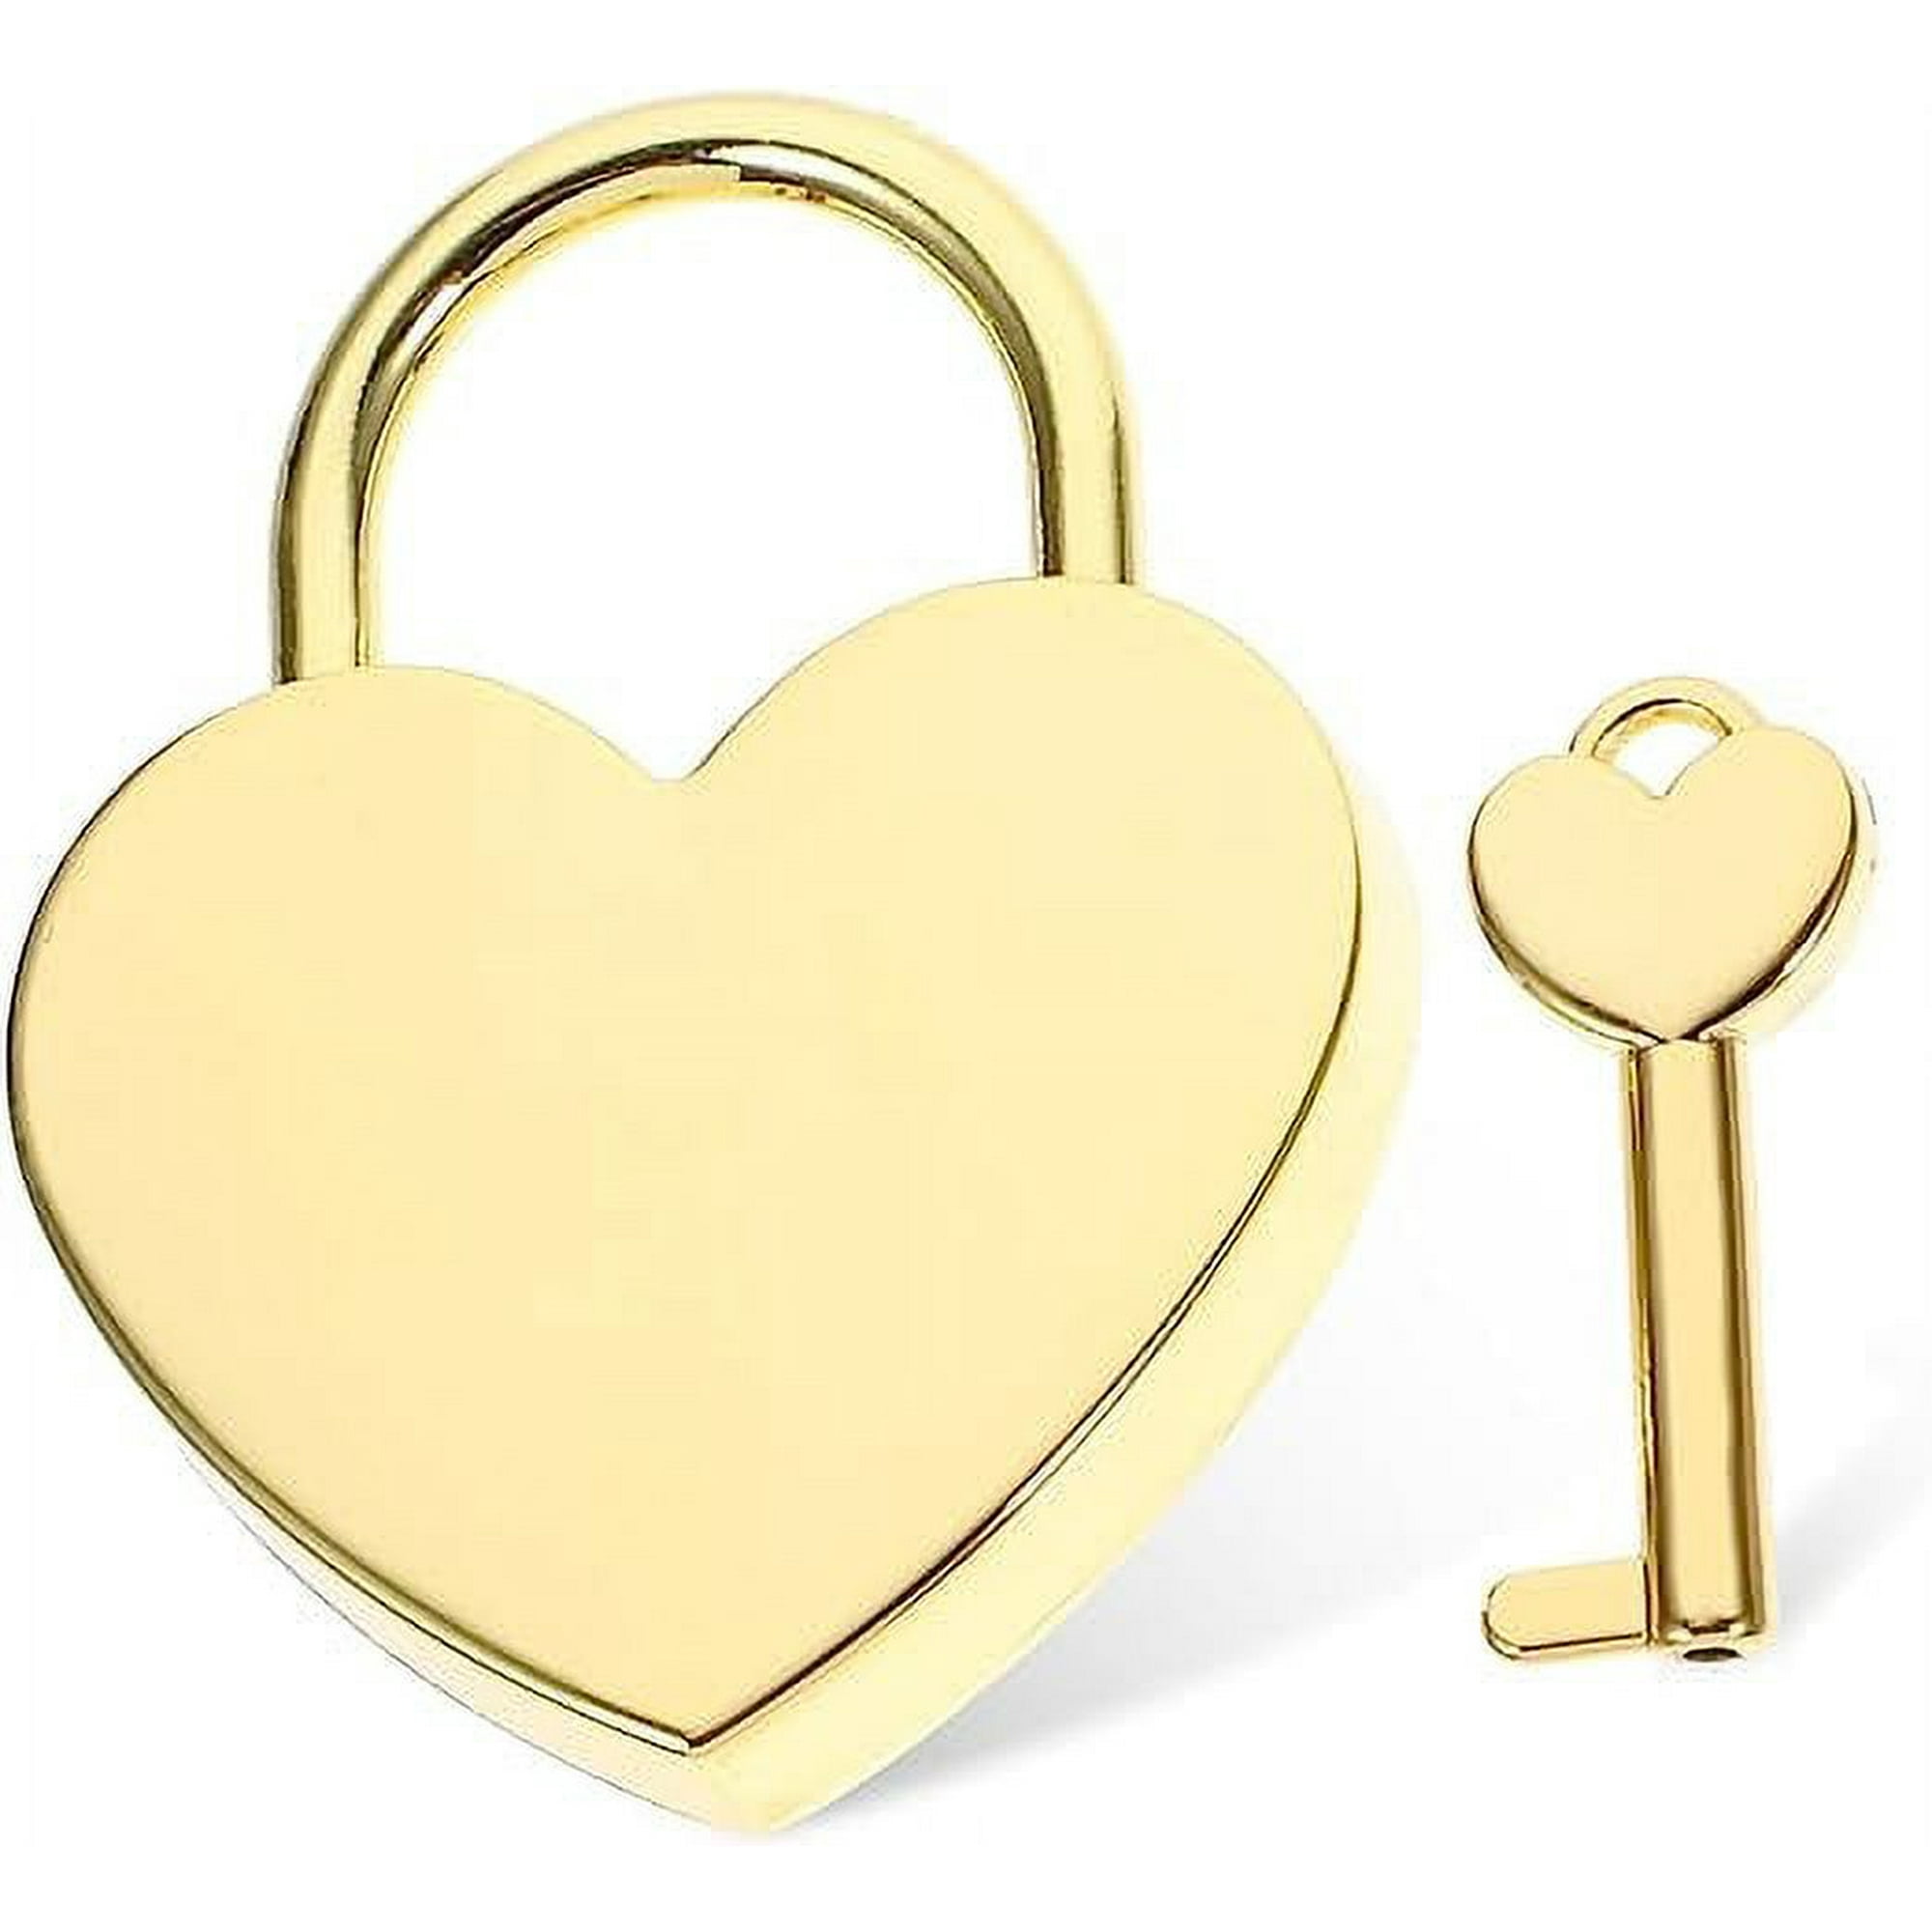 Candado pequeño con forma de corazón, candados para llaves, mochila,  casillero, joyero de Metal, Maleta de